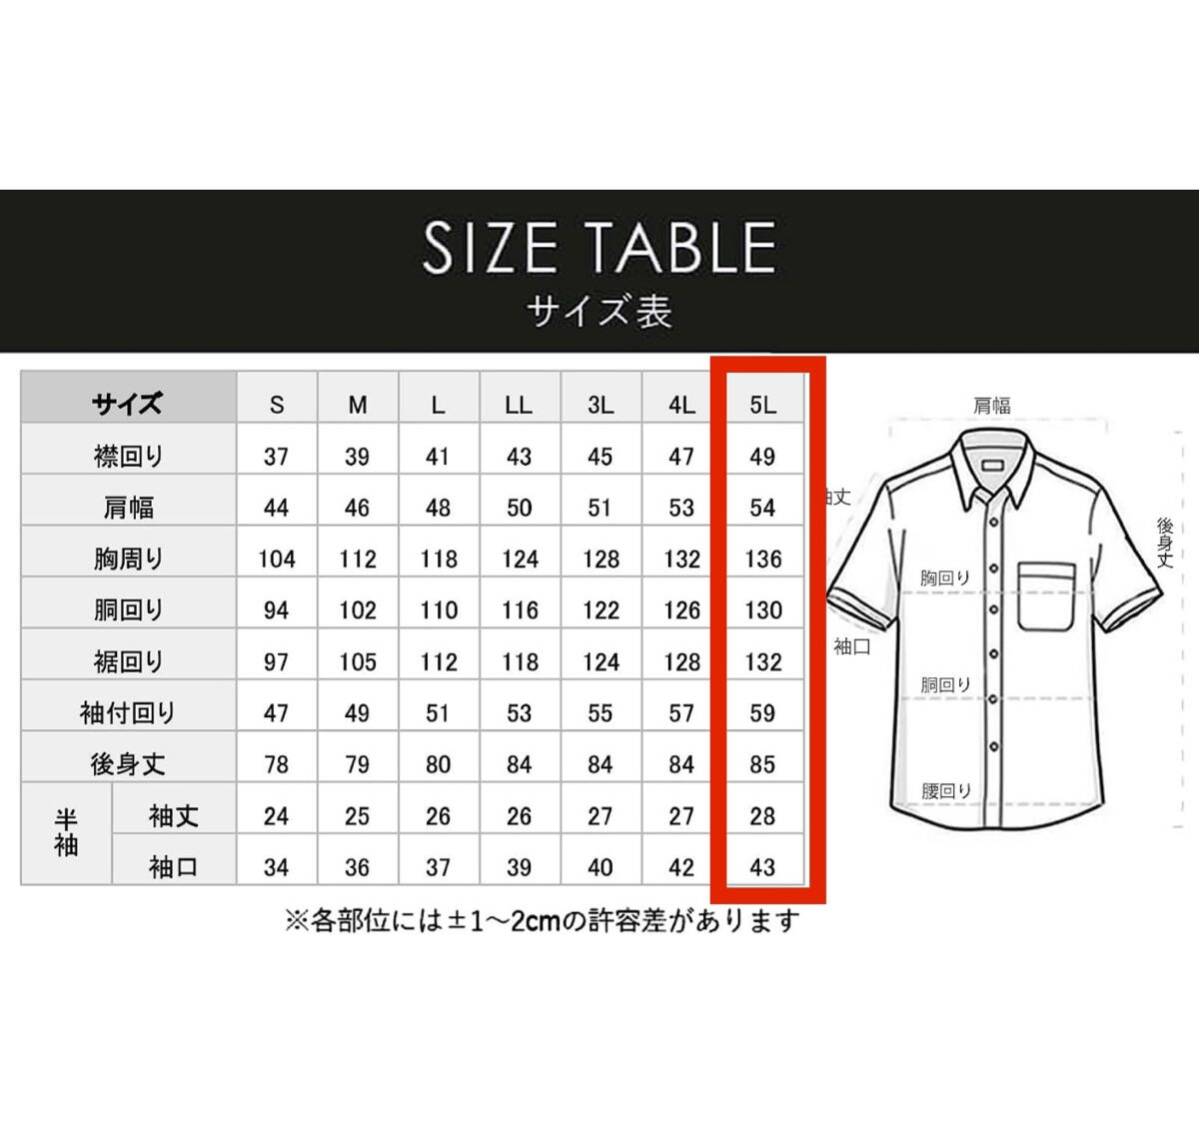  короткий рукав рубашка *5L размер 49* вид устойчивость * хлопок 25% полиэстер 75%**DRESS CODE 101